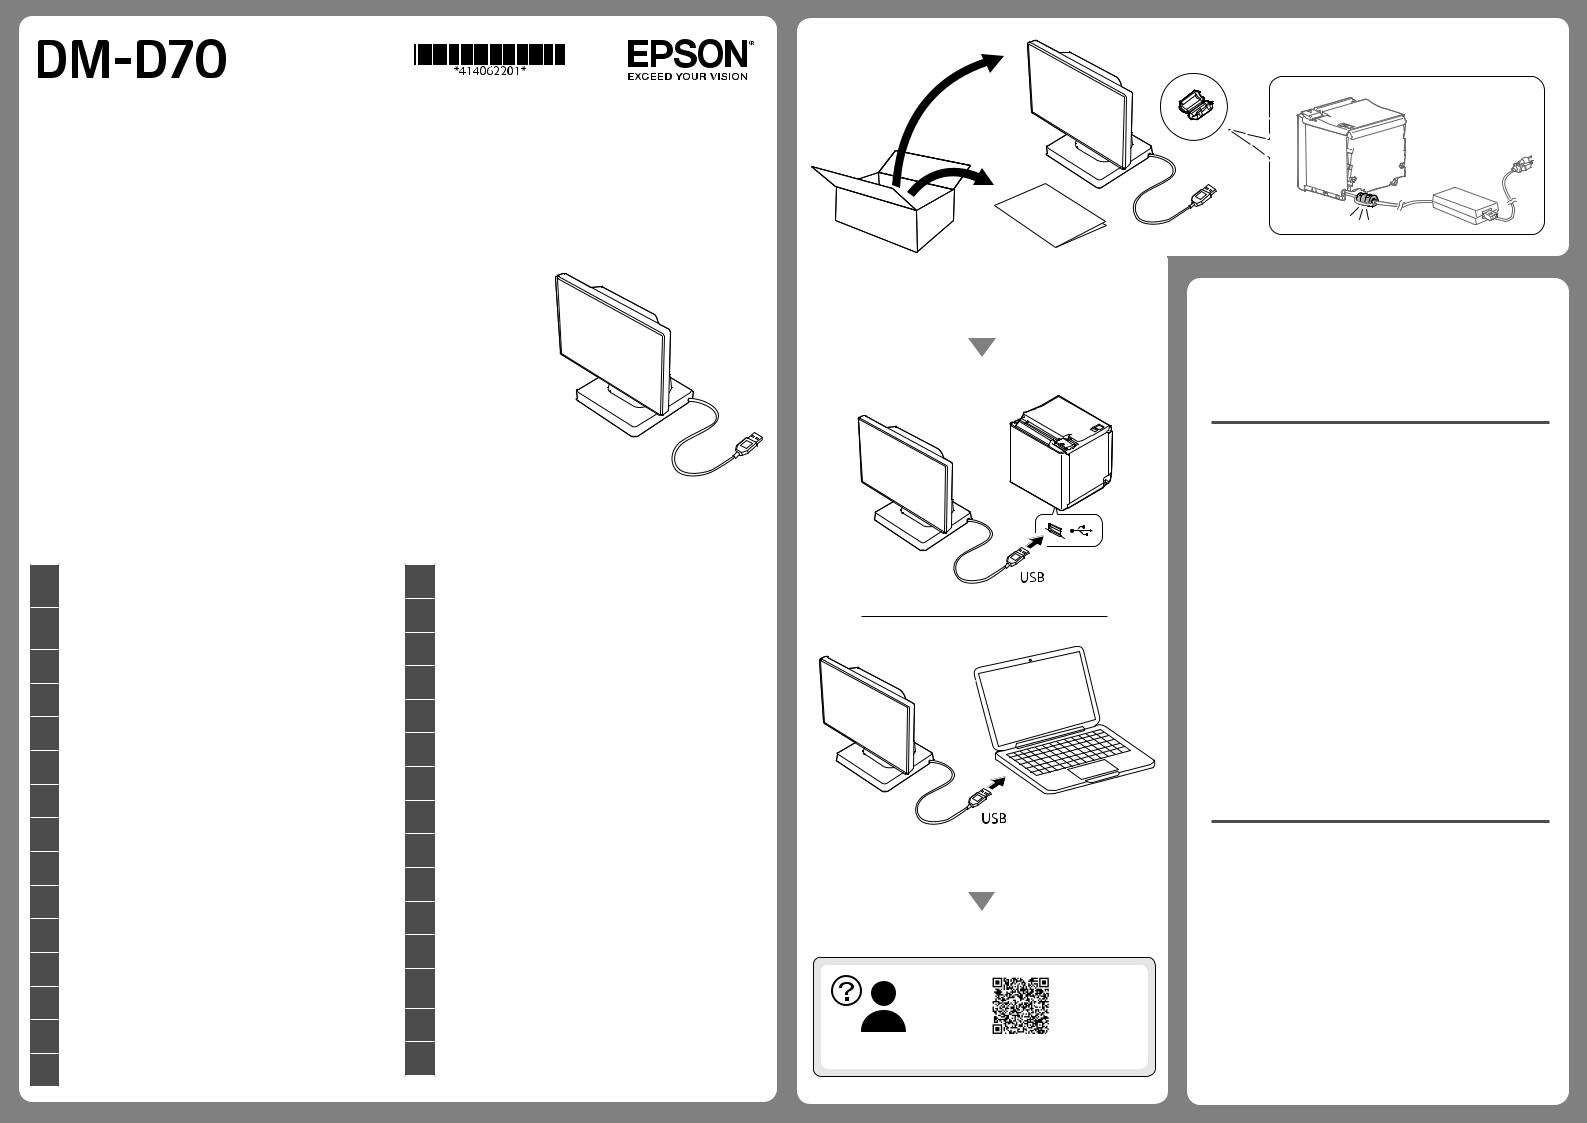 Epson DM-D70 Setup Guide